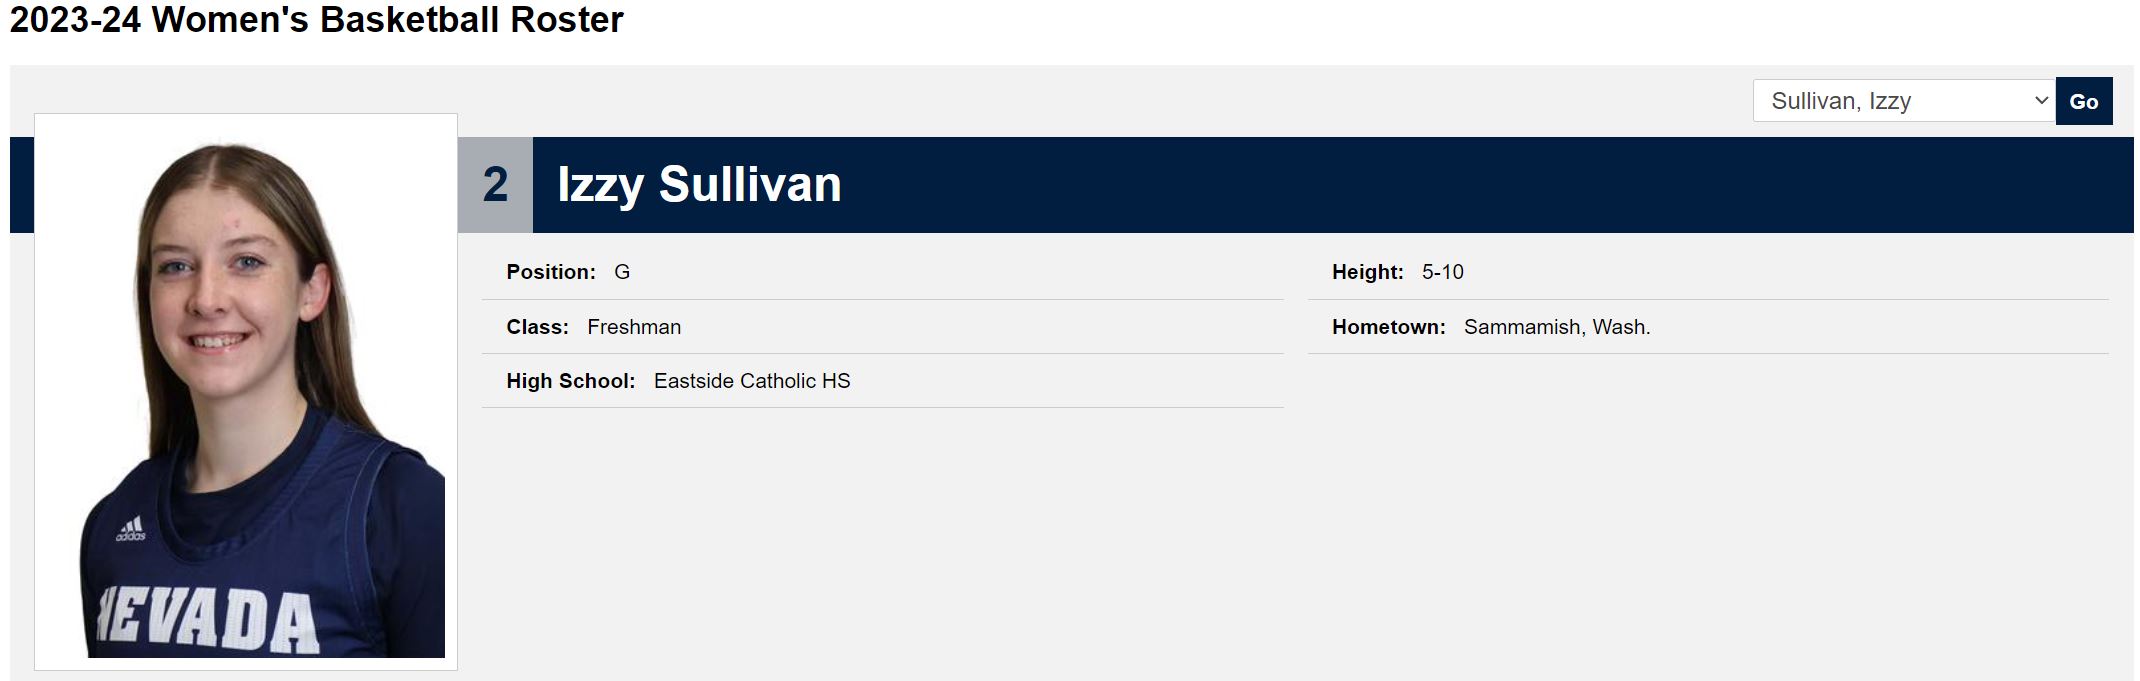 Isabel Sullivan - Nevada WBB 2023-24 Freshman